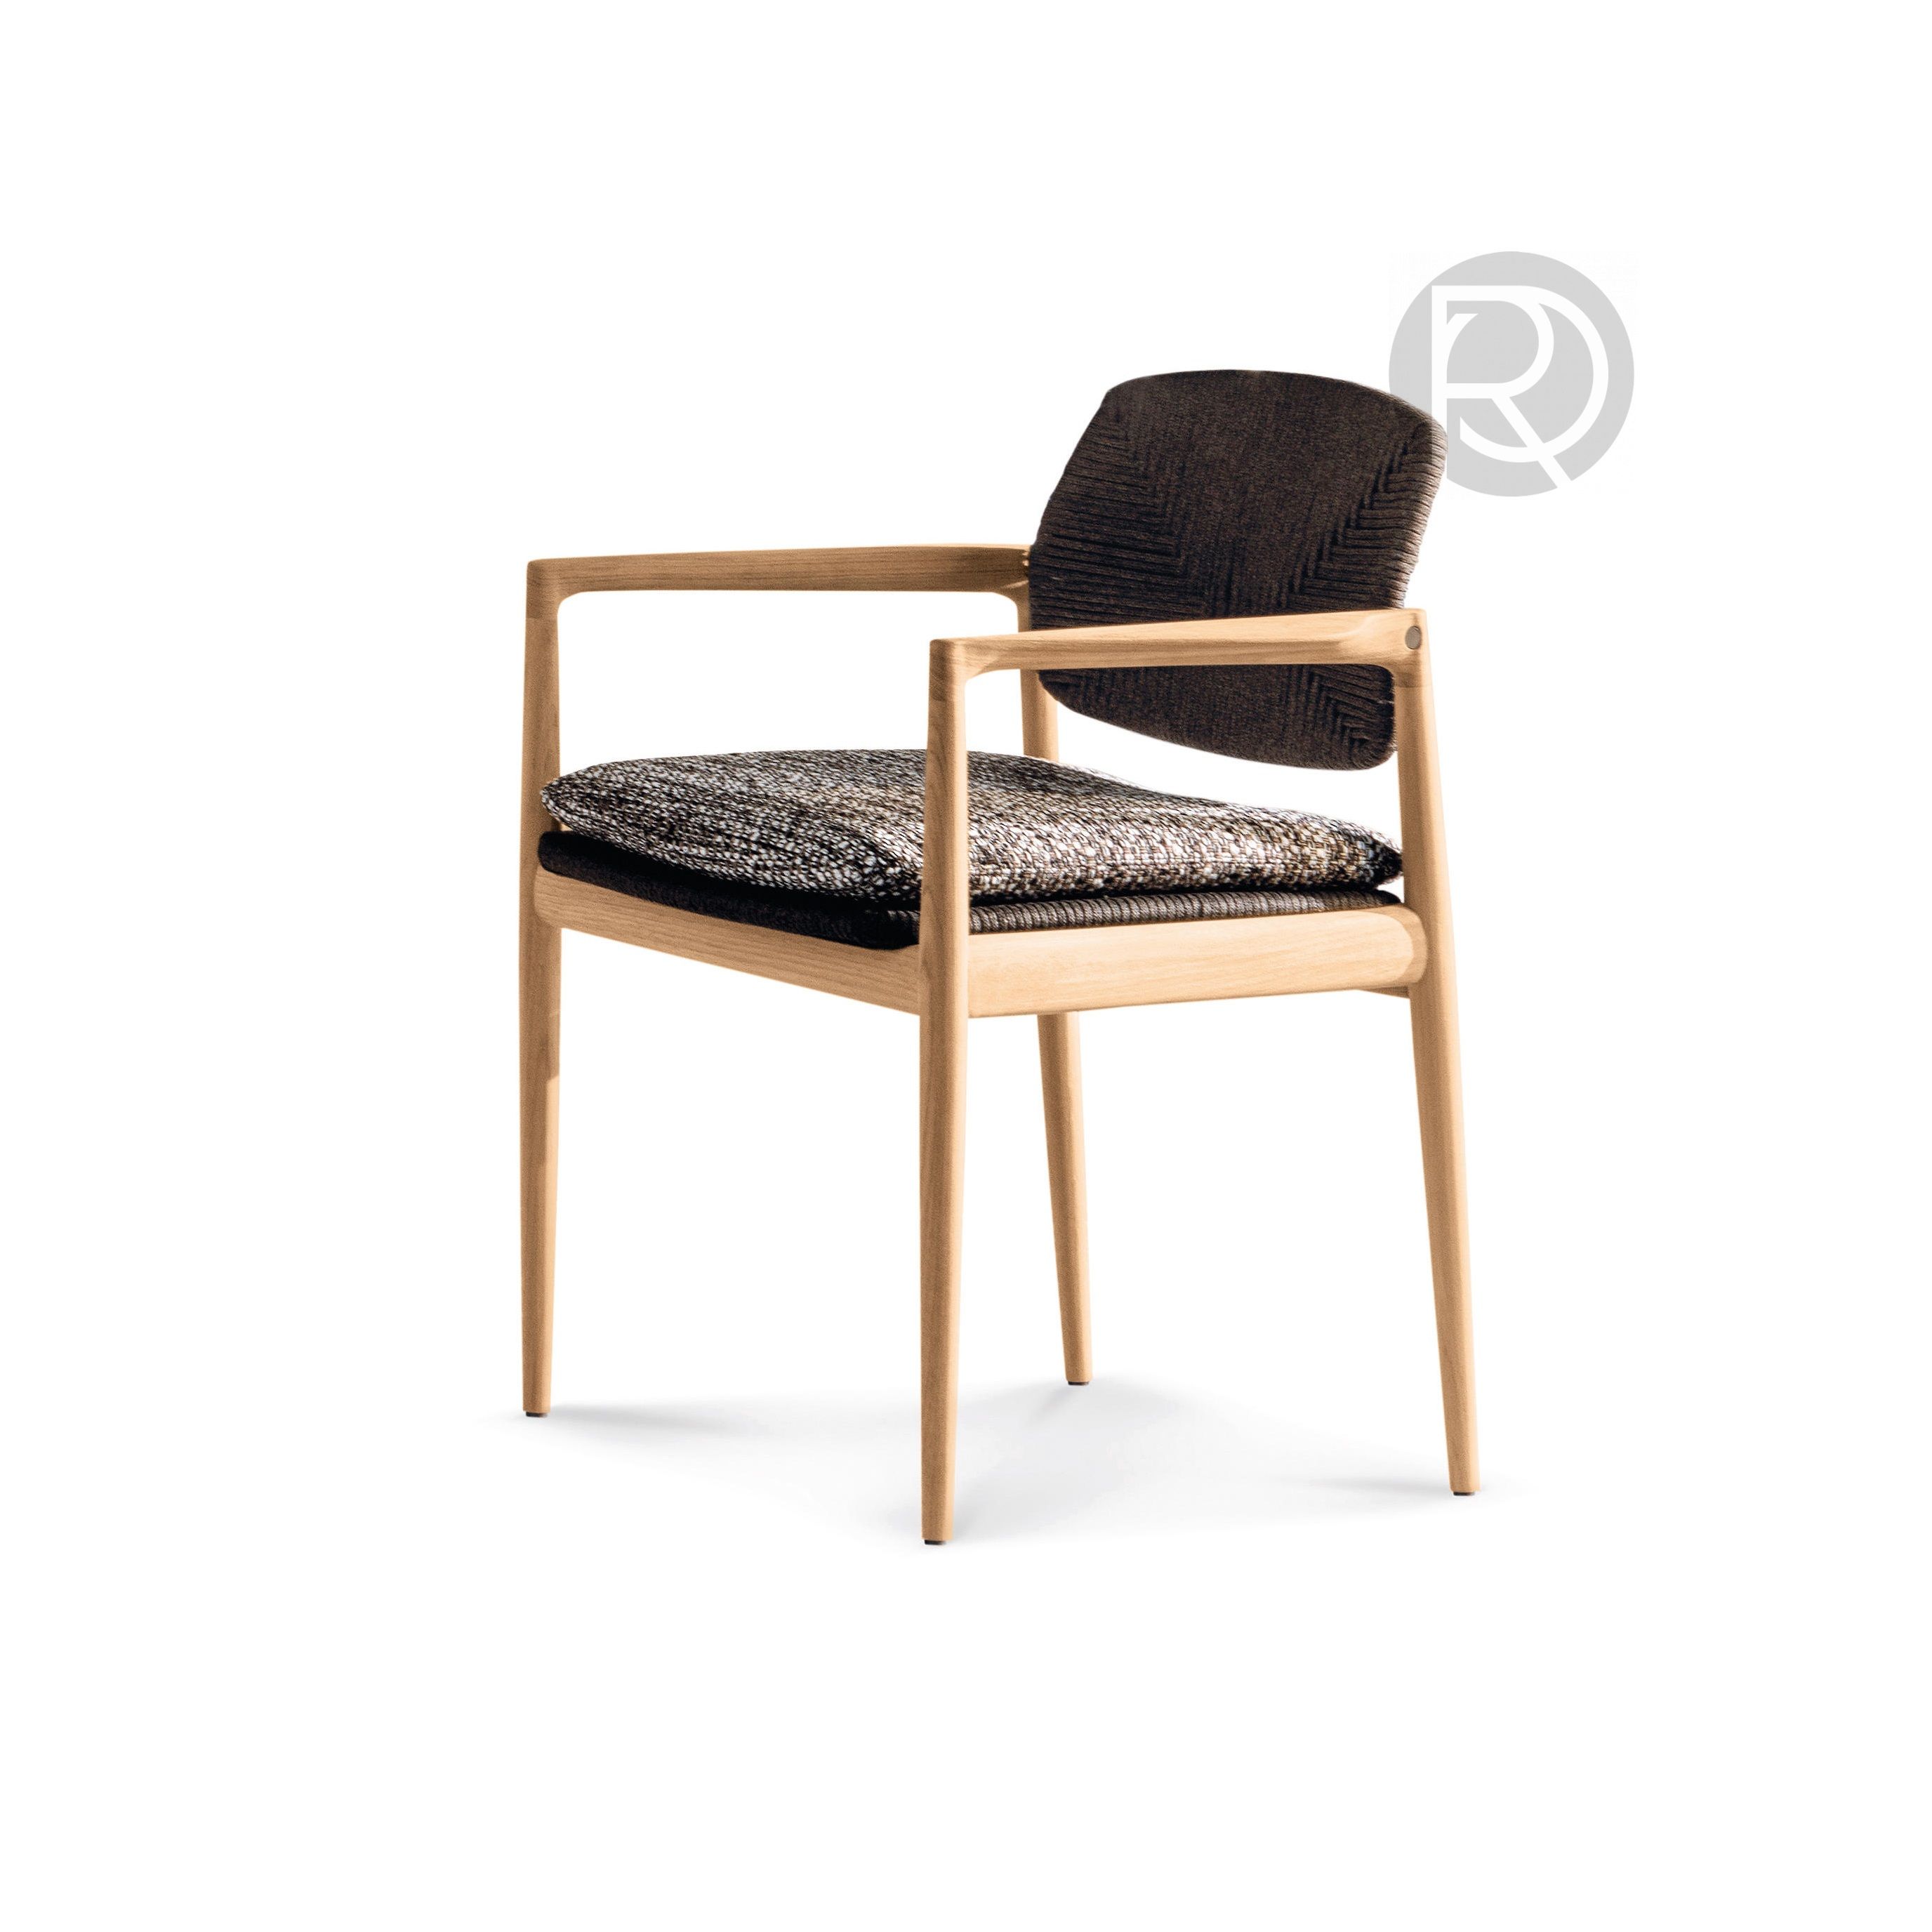 YOKO by Minotti Outdoor chair